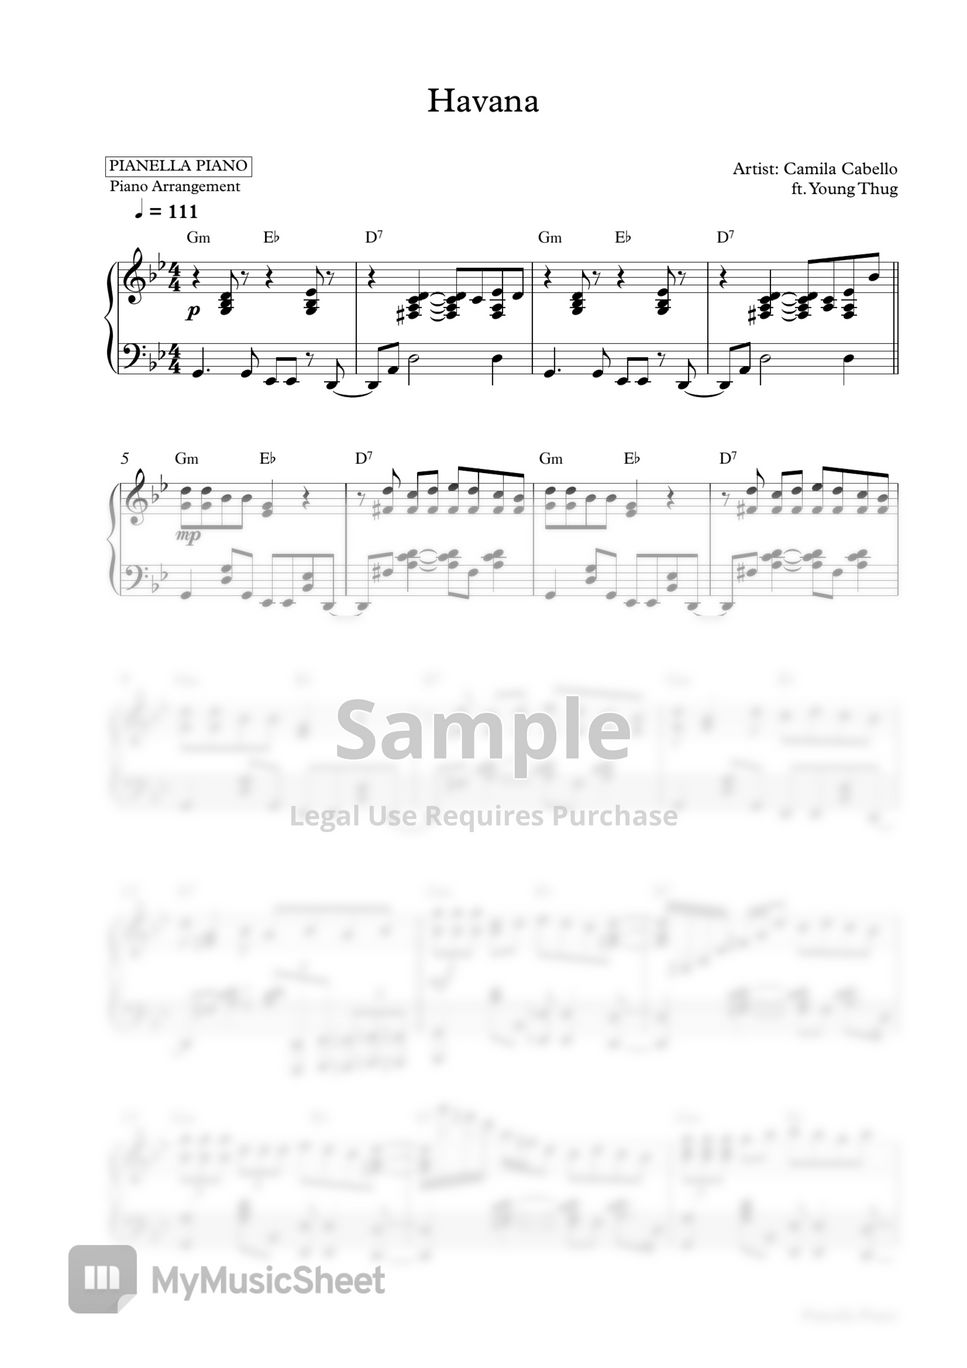 Pianella Piano - Code: Hvn5 (Piano Sheet)